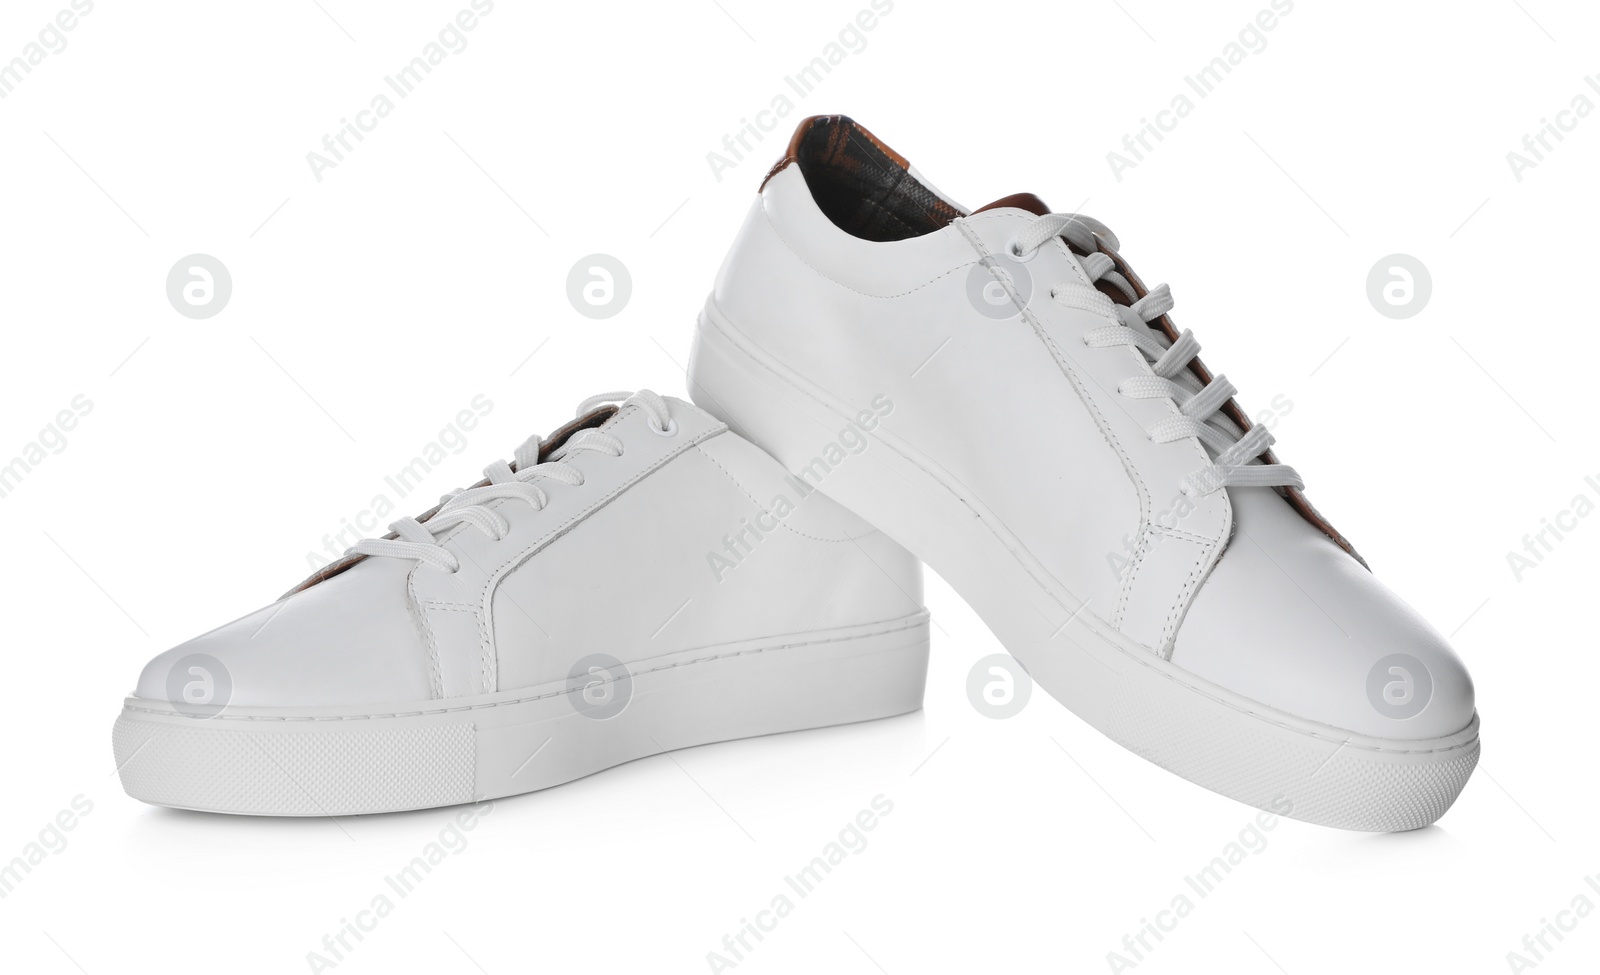 Photo of Pair of stylish sports shoes on white background